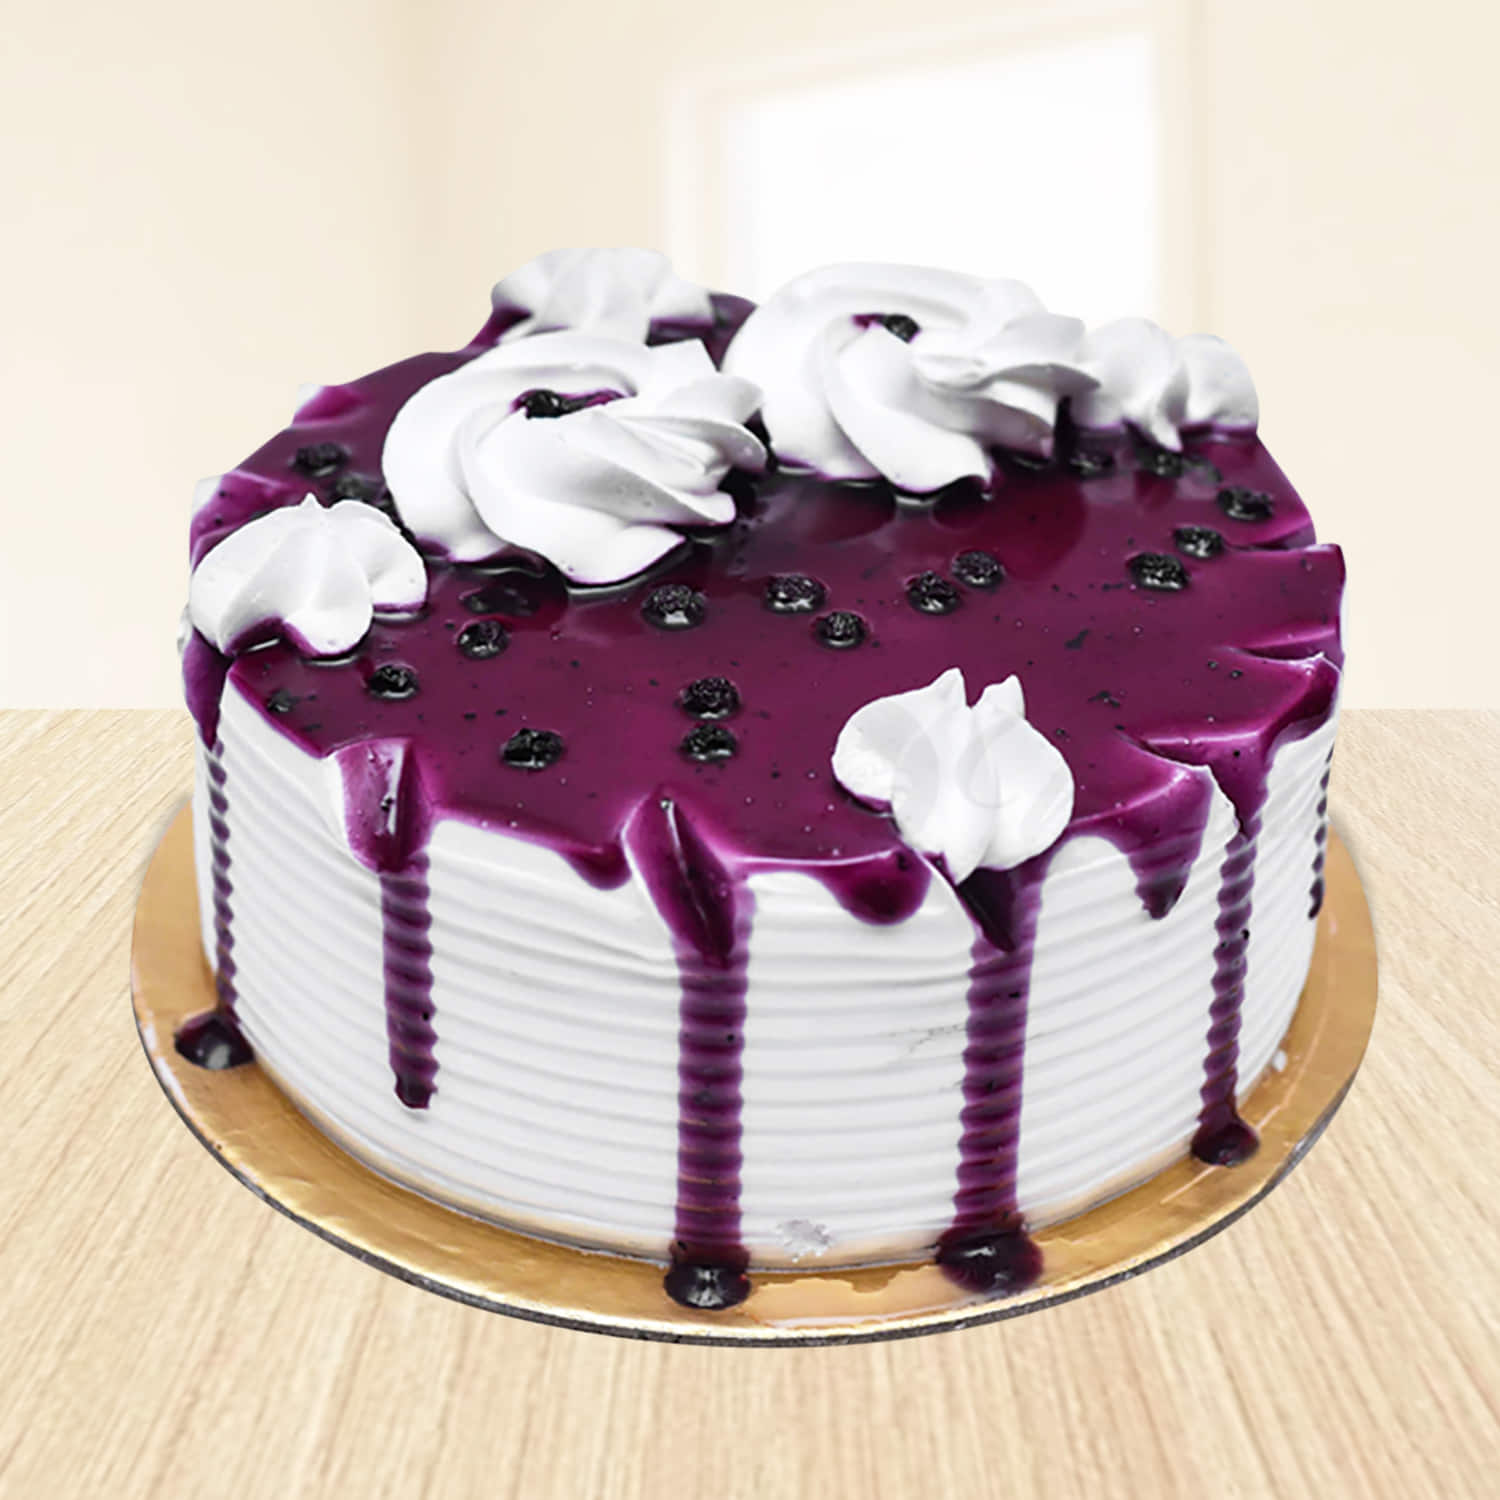 triple blueberry layer cake | Brooklyn Homemaker